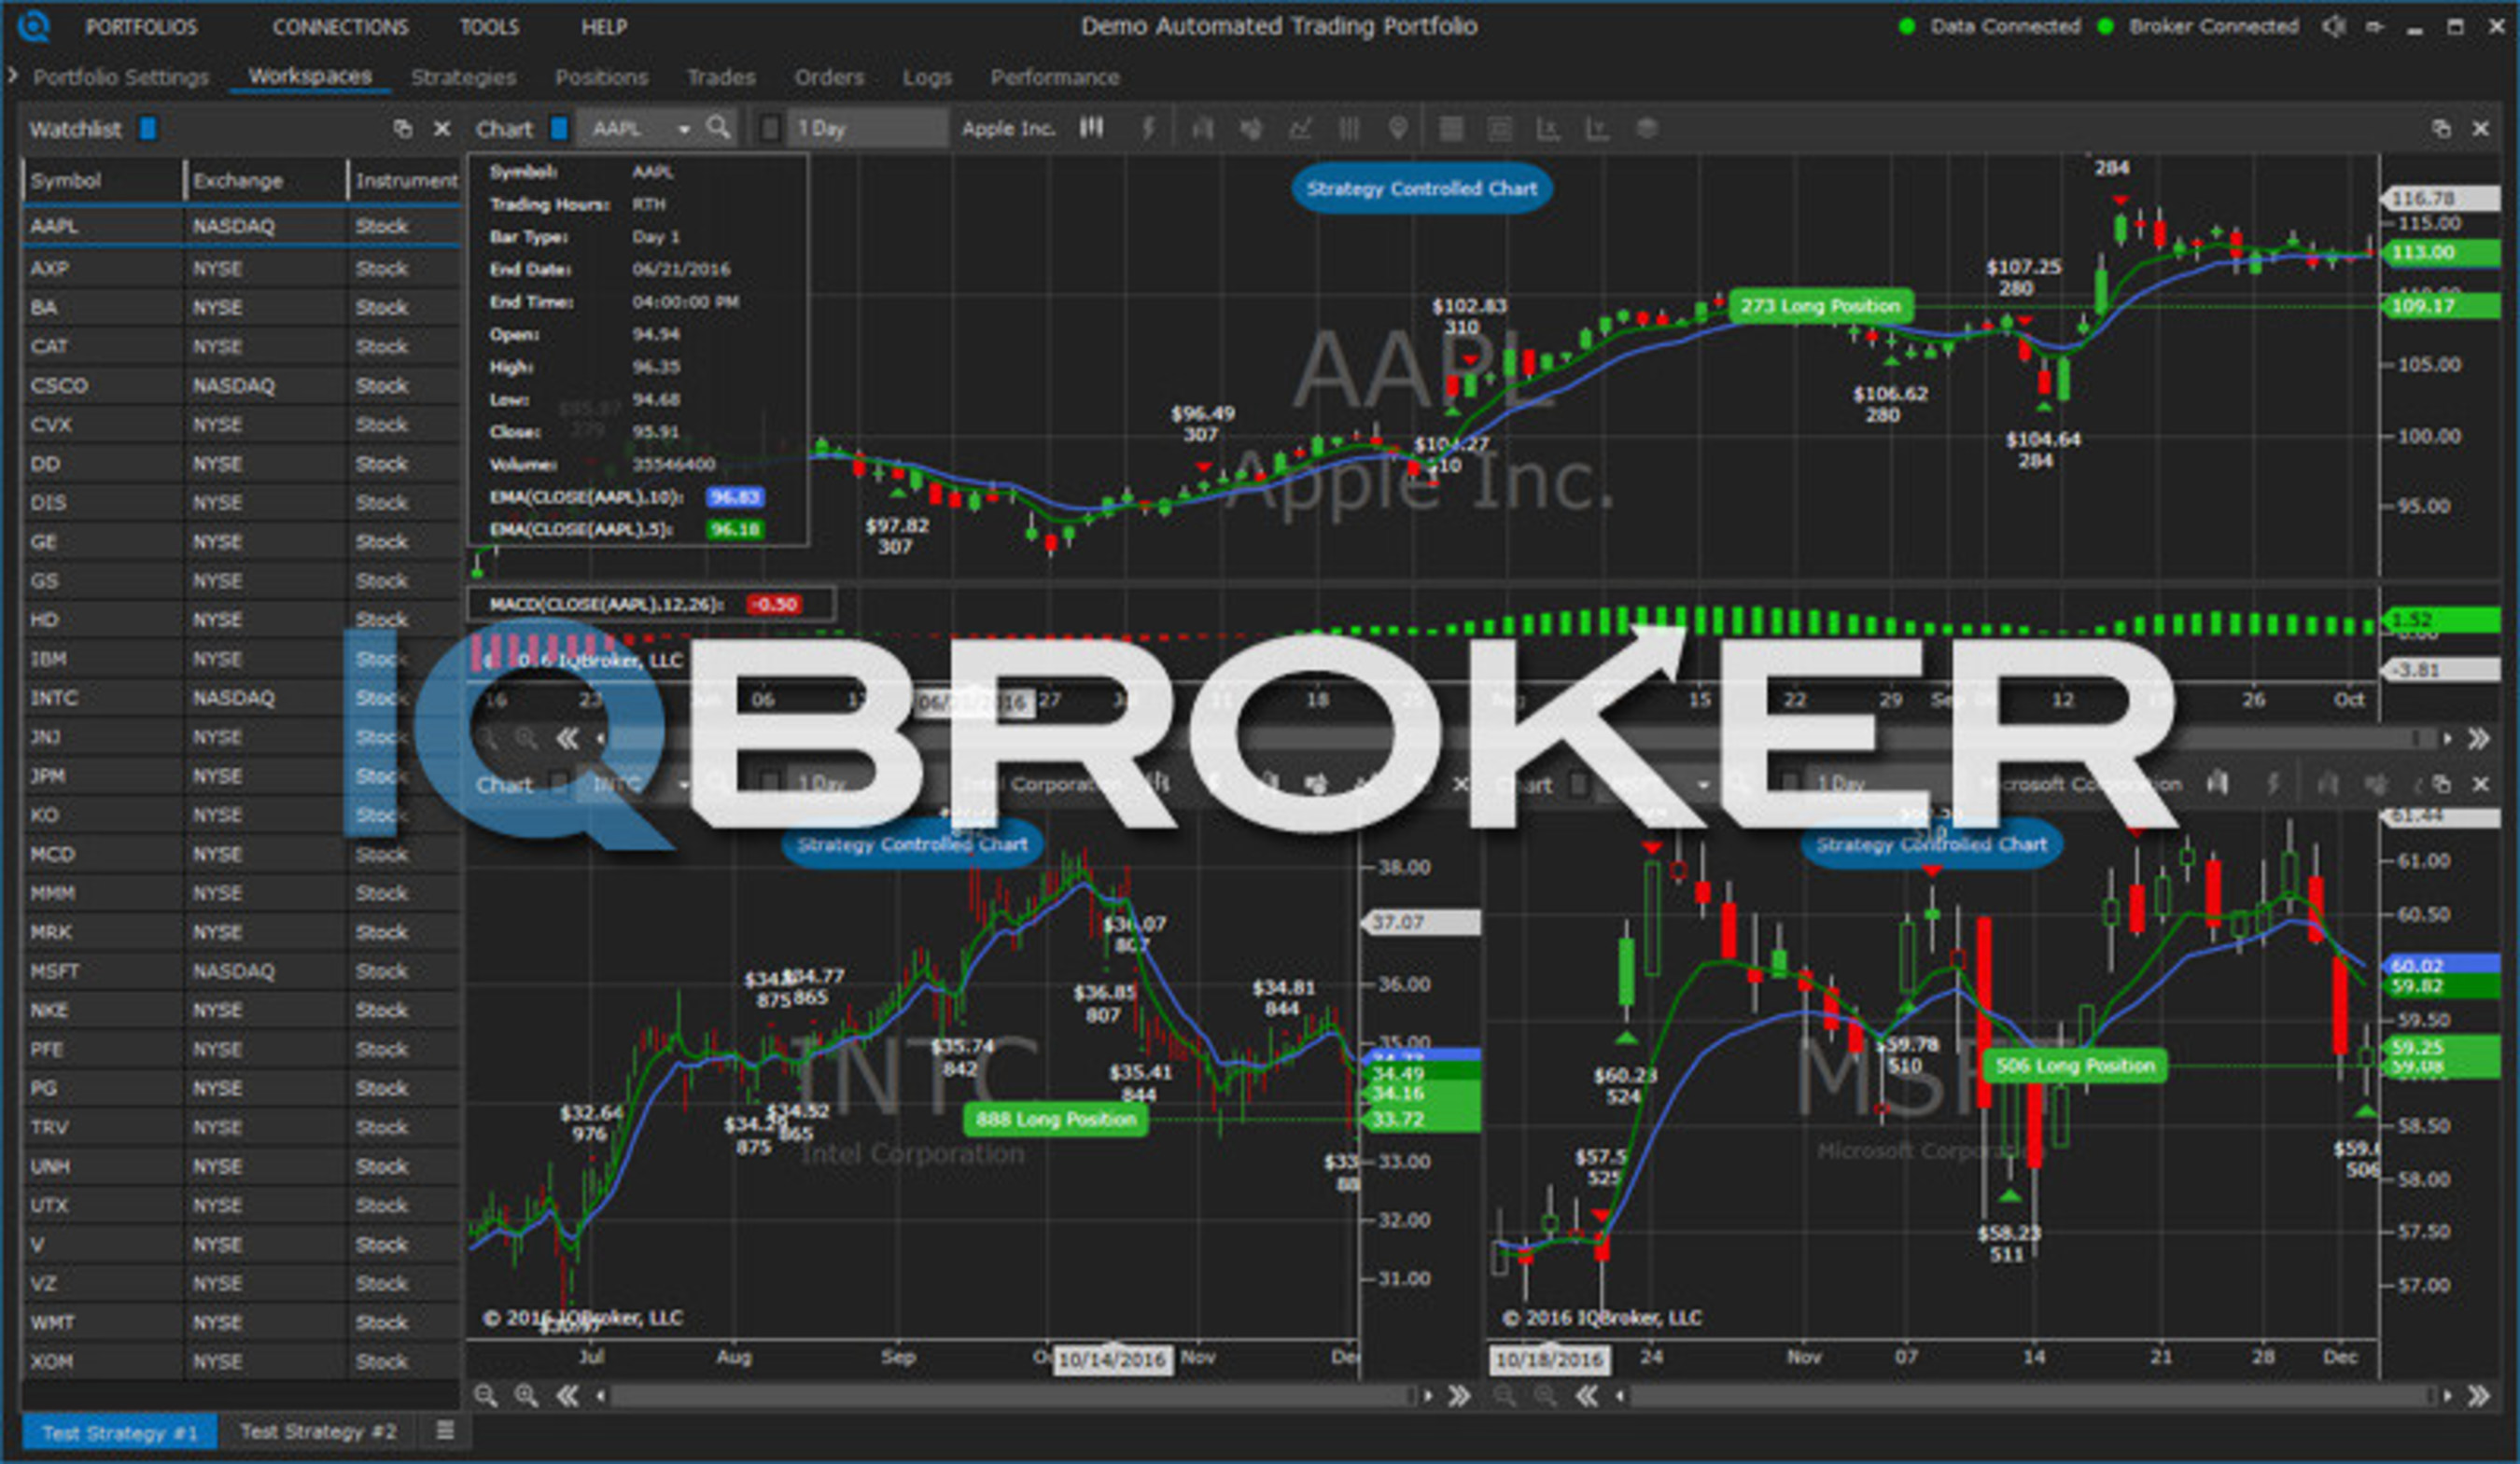 IQBroker Launches a Revolutionary Algorithmic Trading Platform